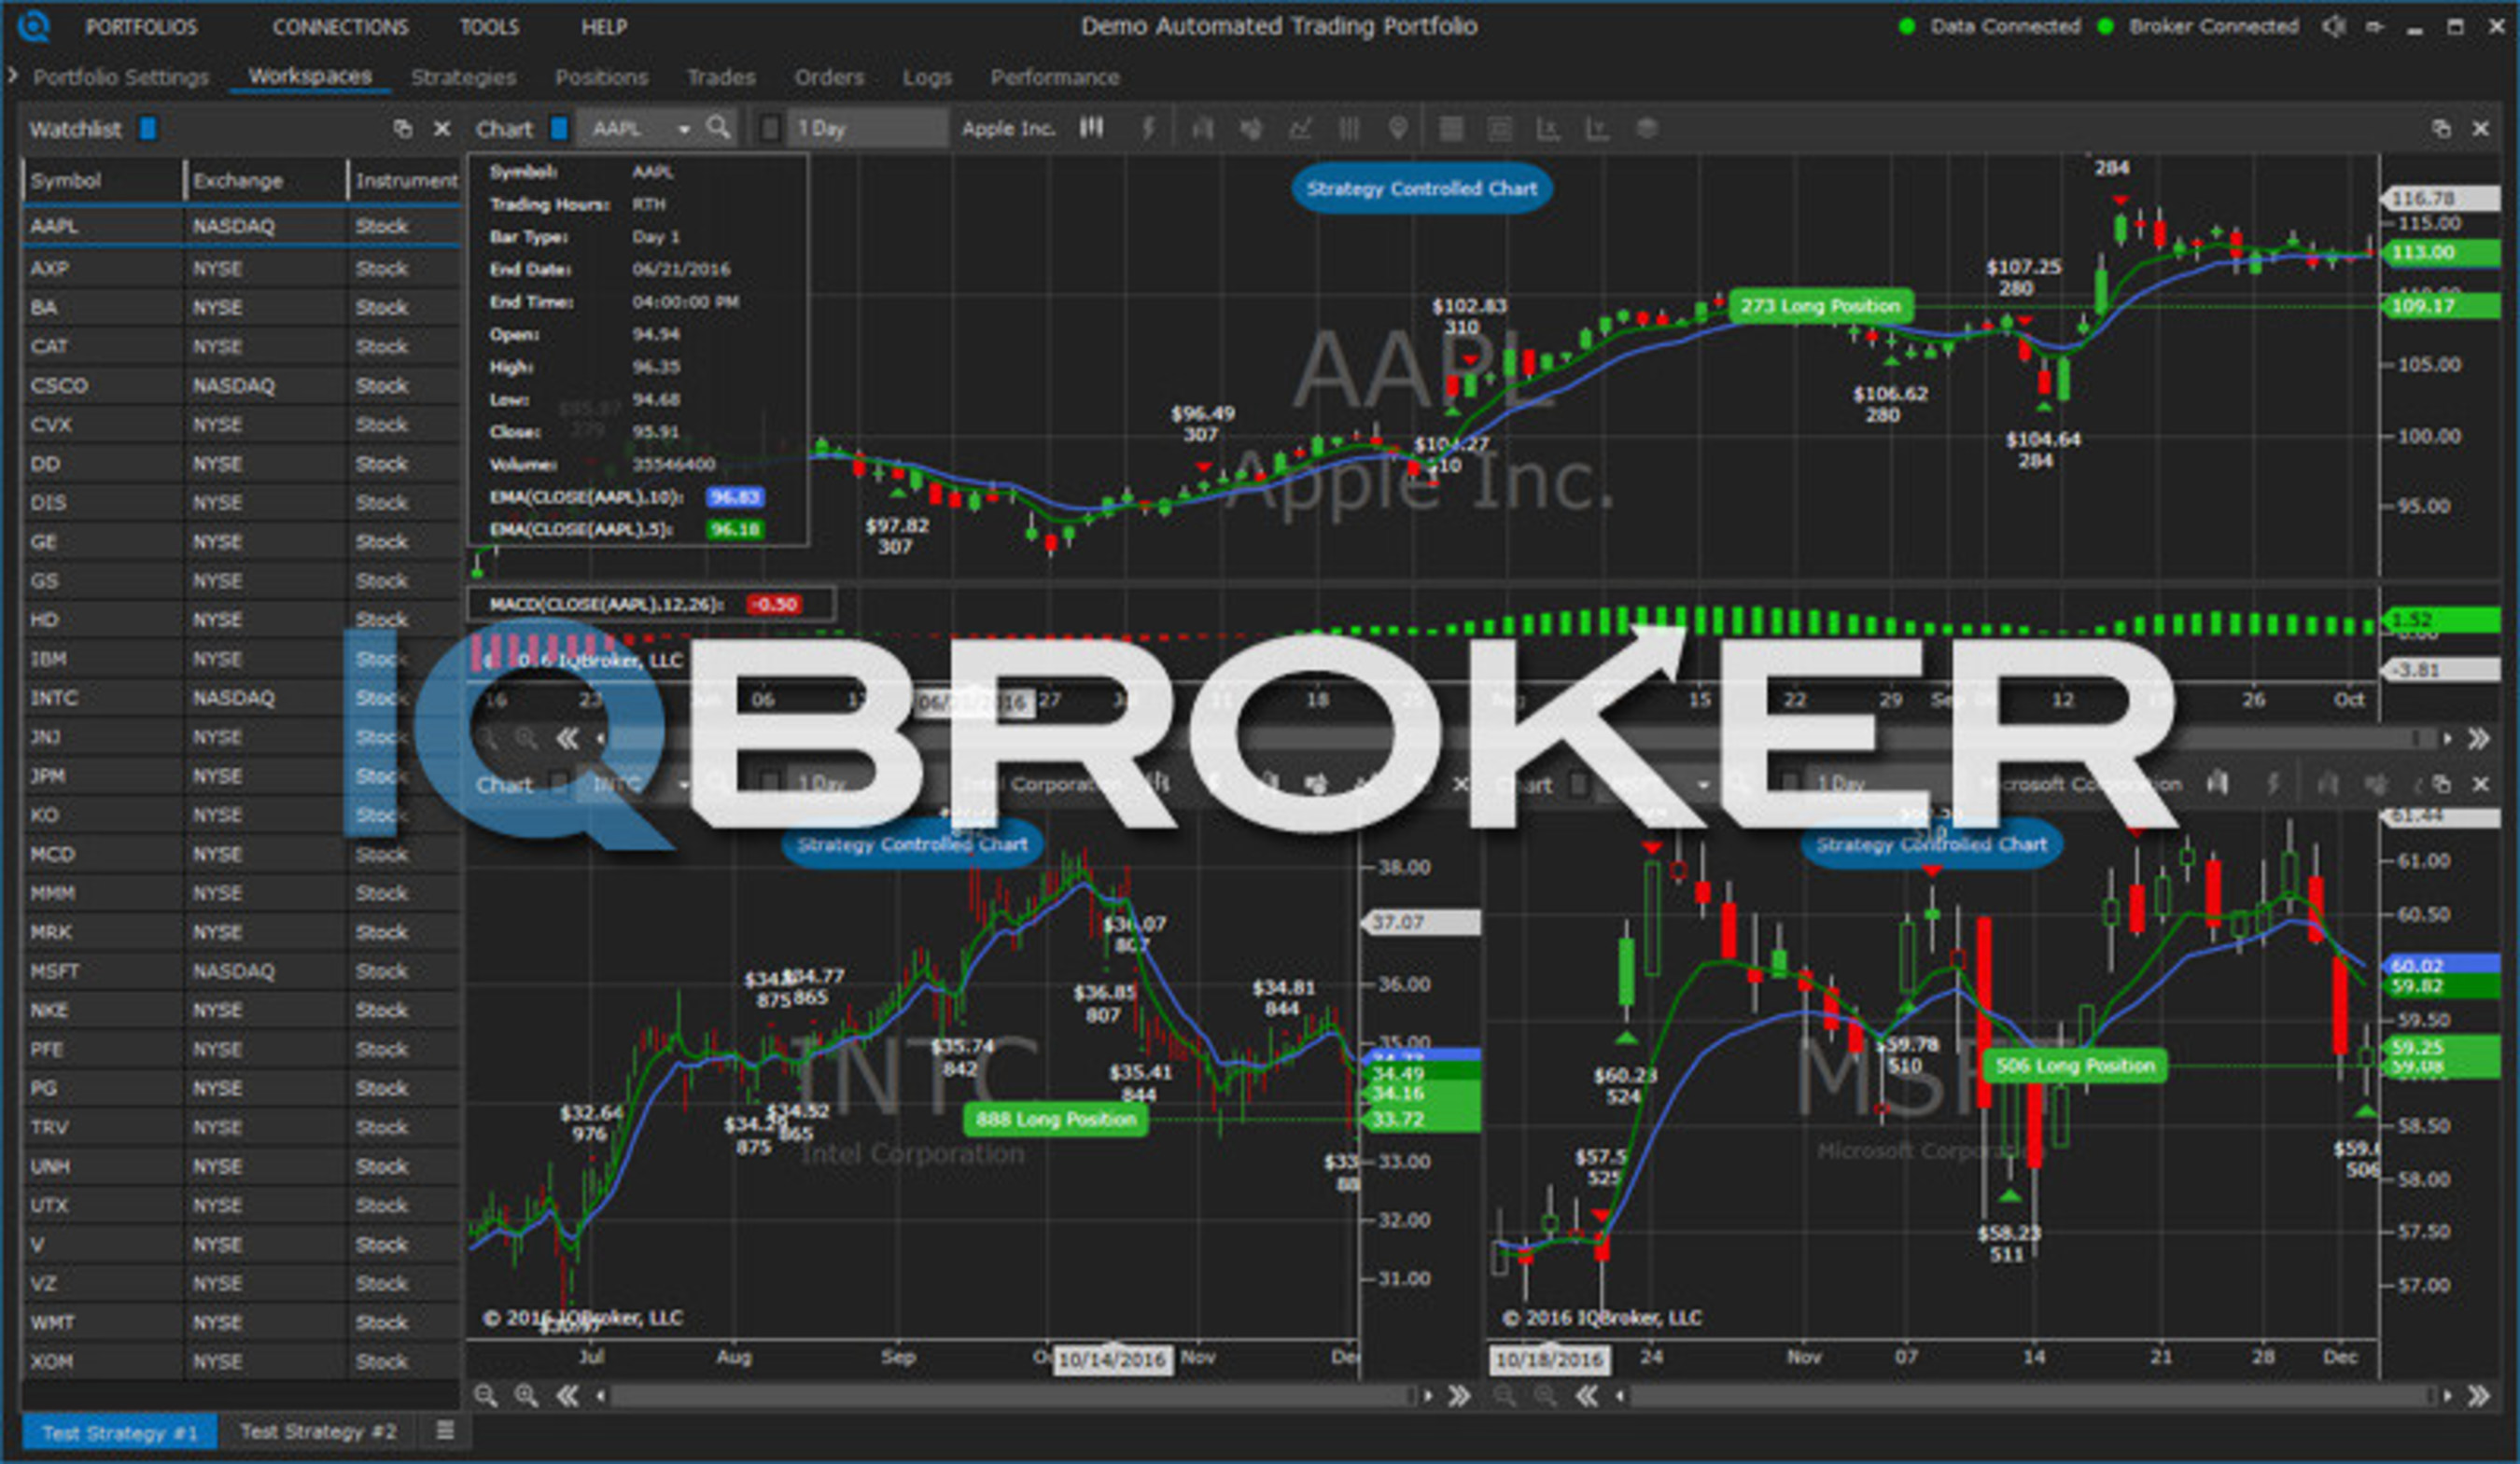 IQBroker Launches a Revolutionary Algorithmic Trading Platform